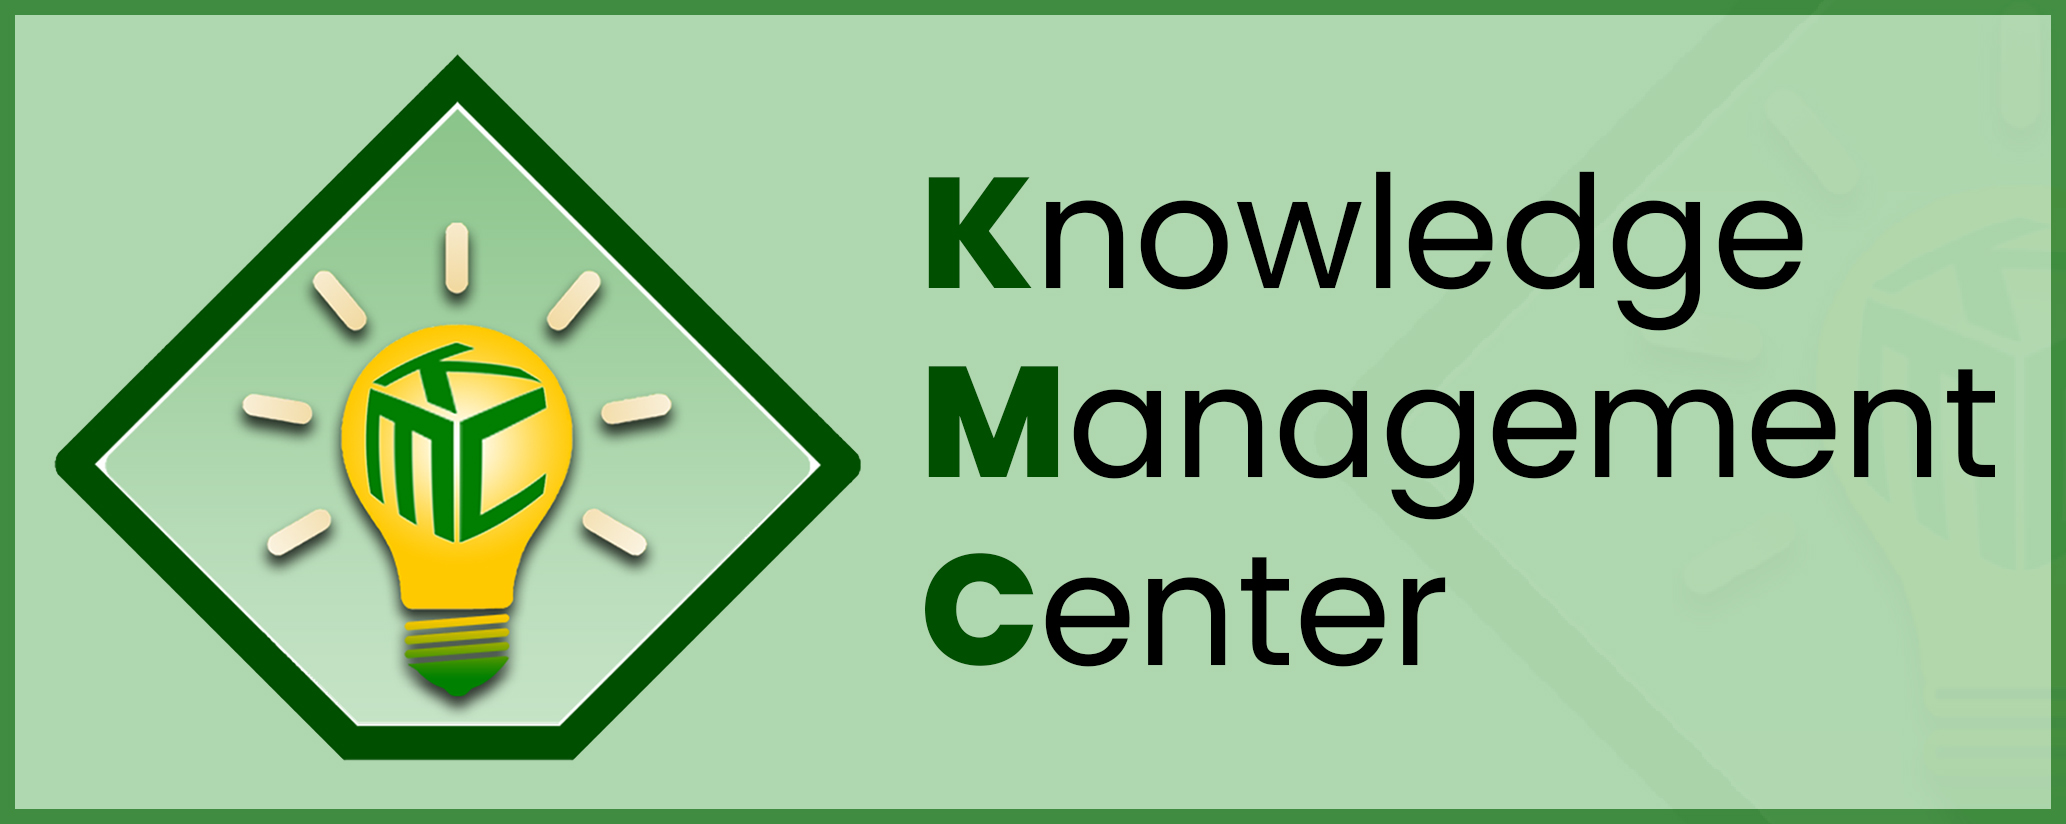 Knowledge Management Center